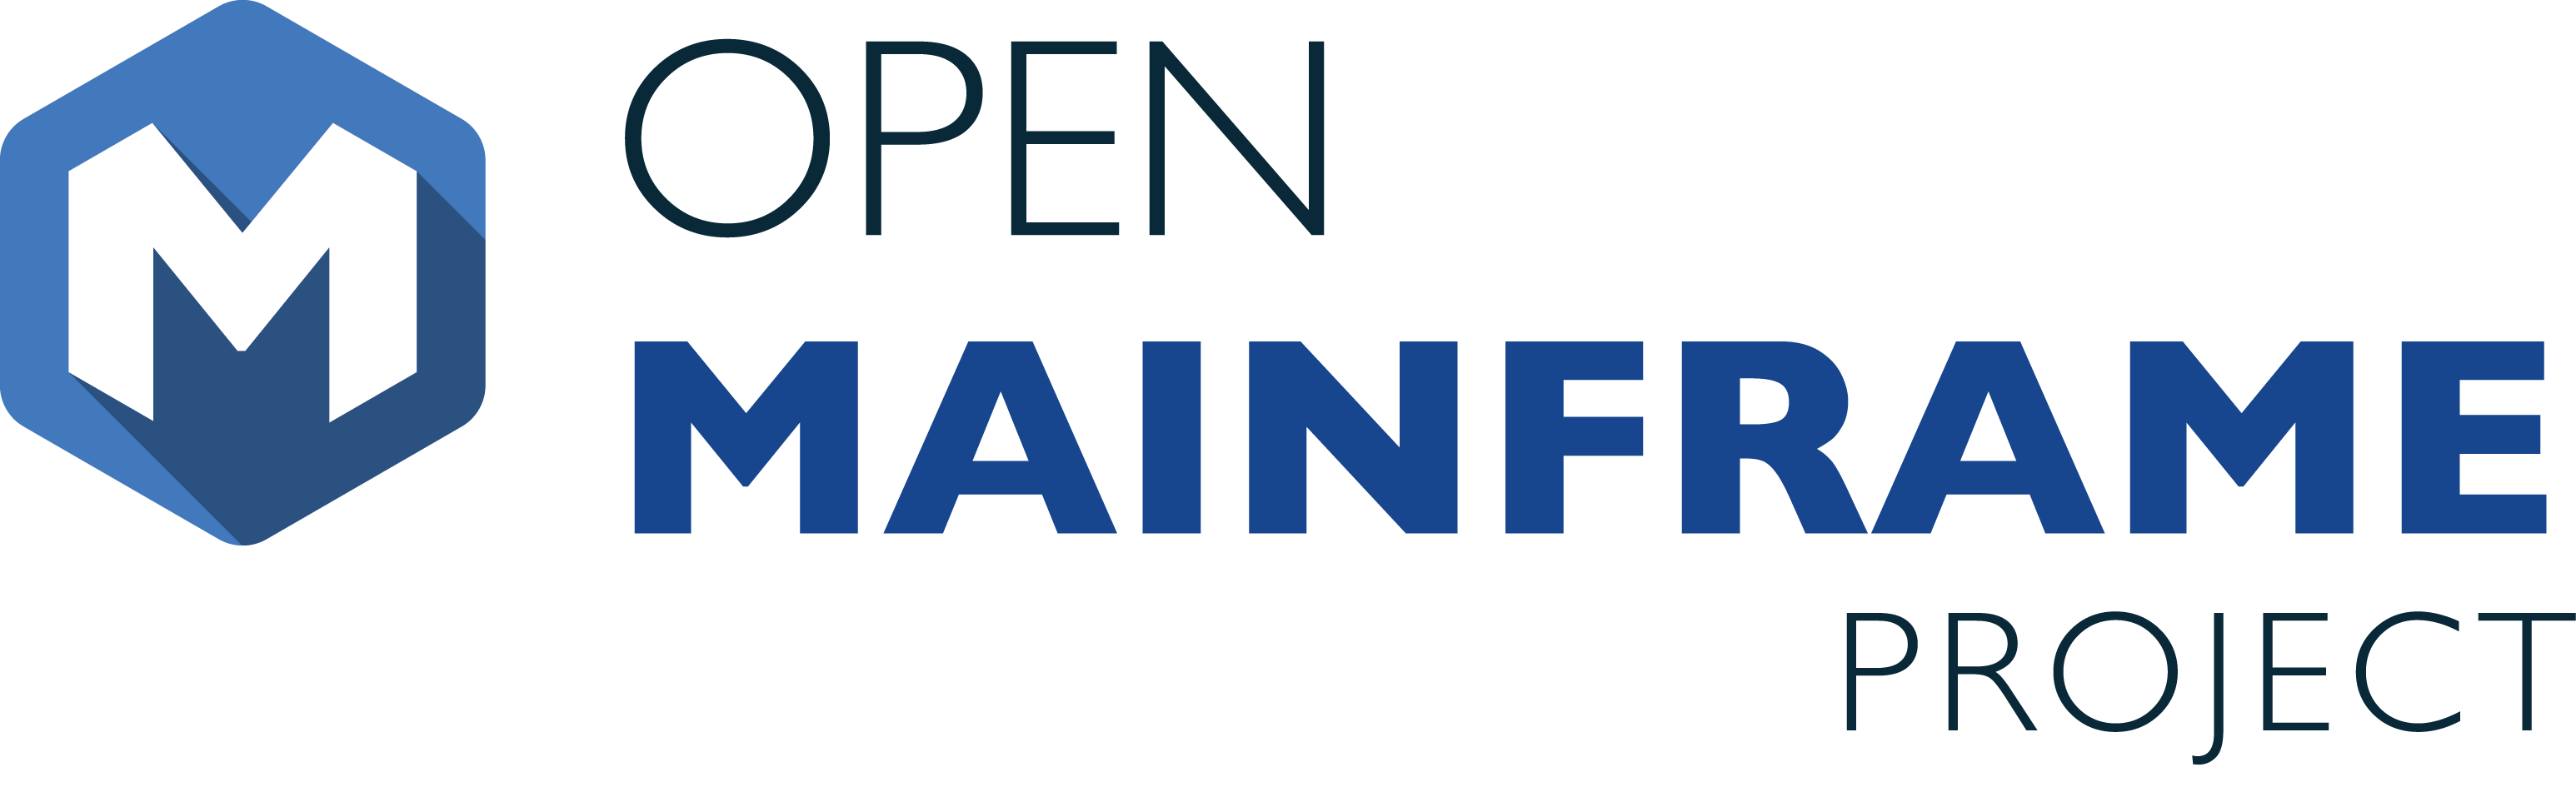 Open Mainframe Project logo